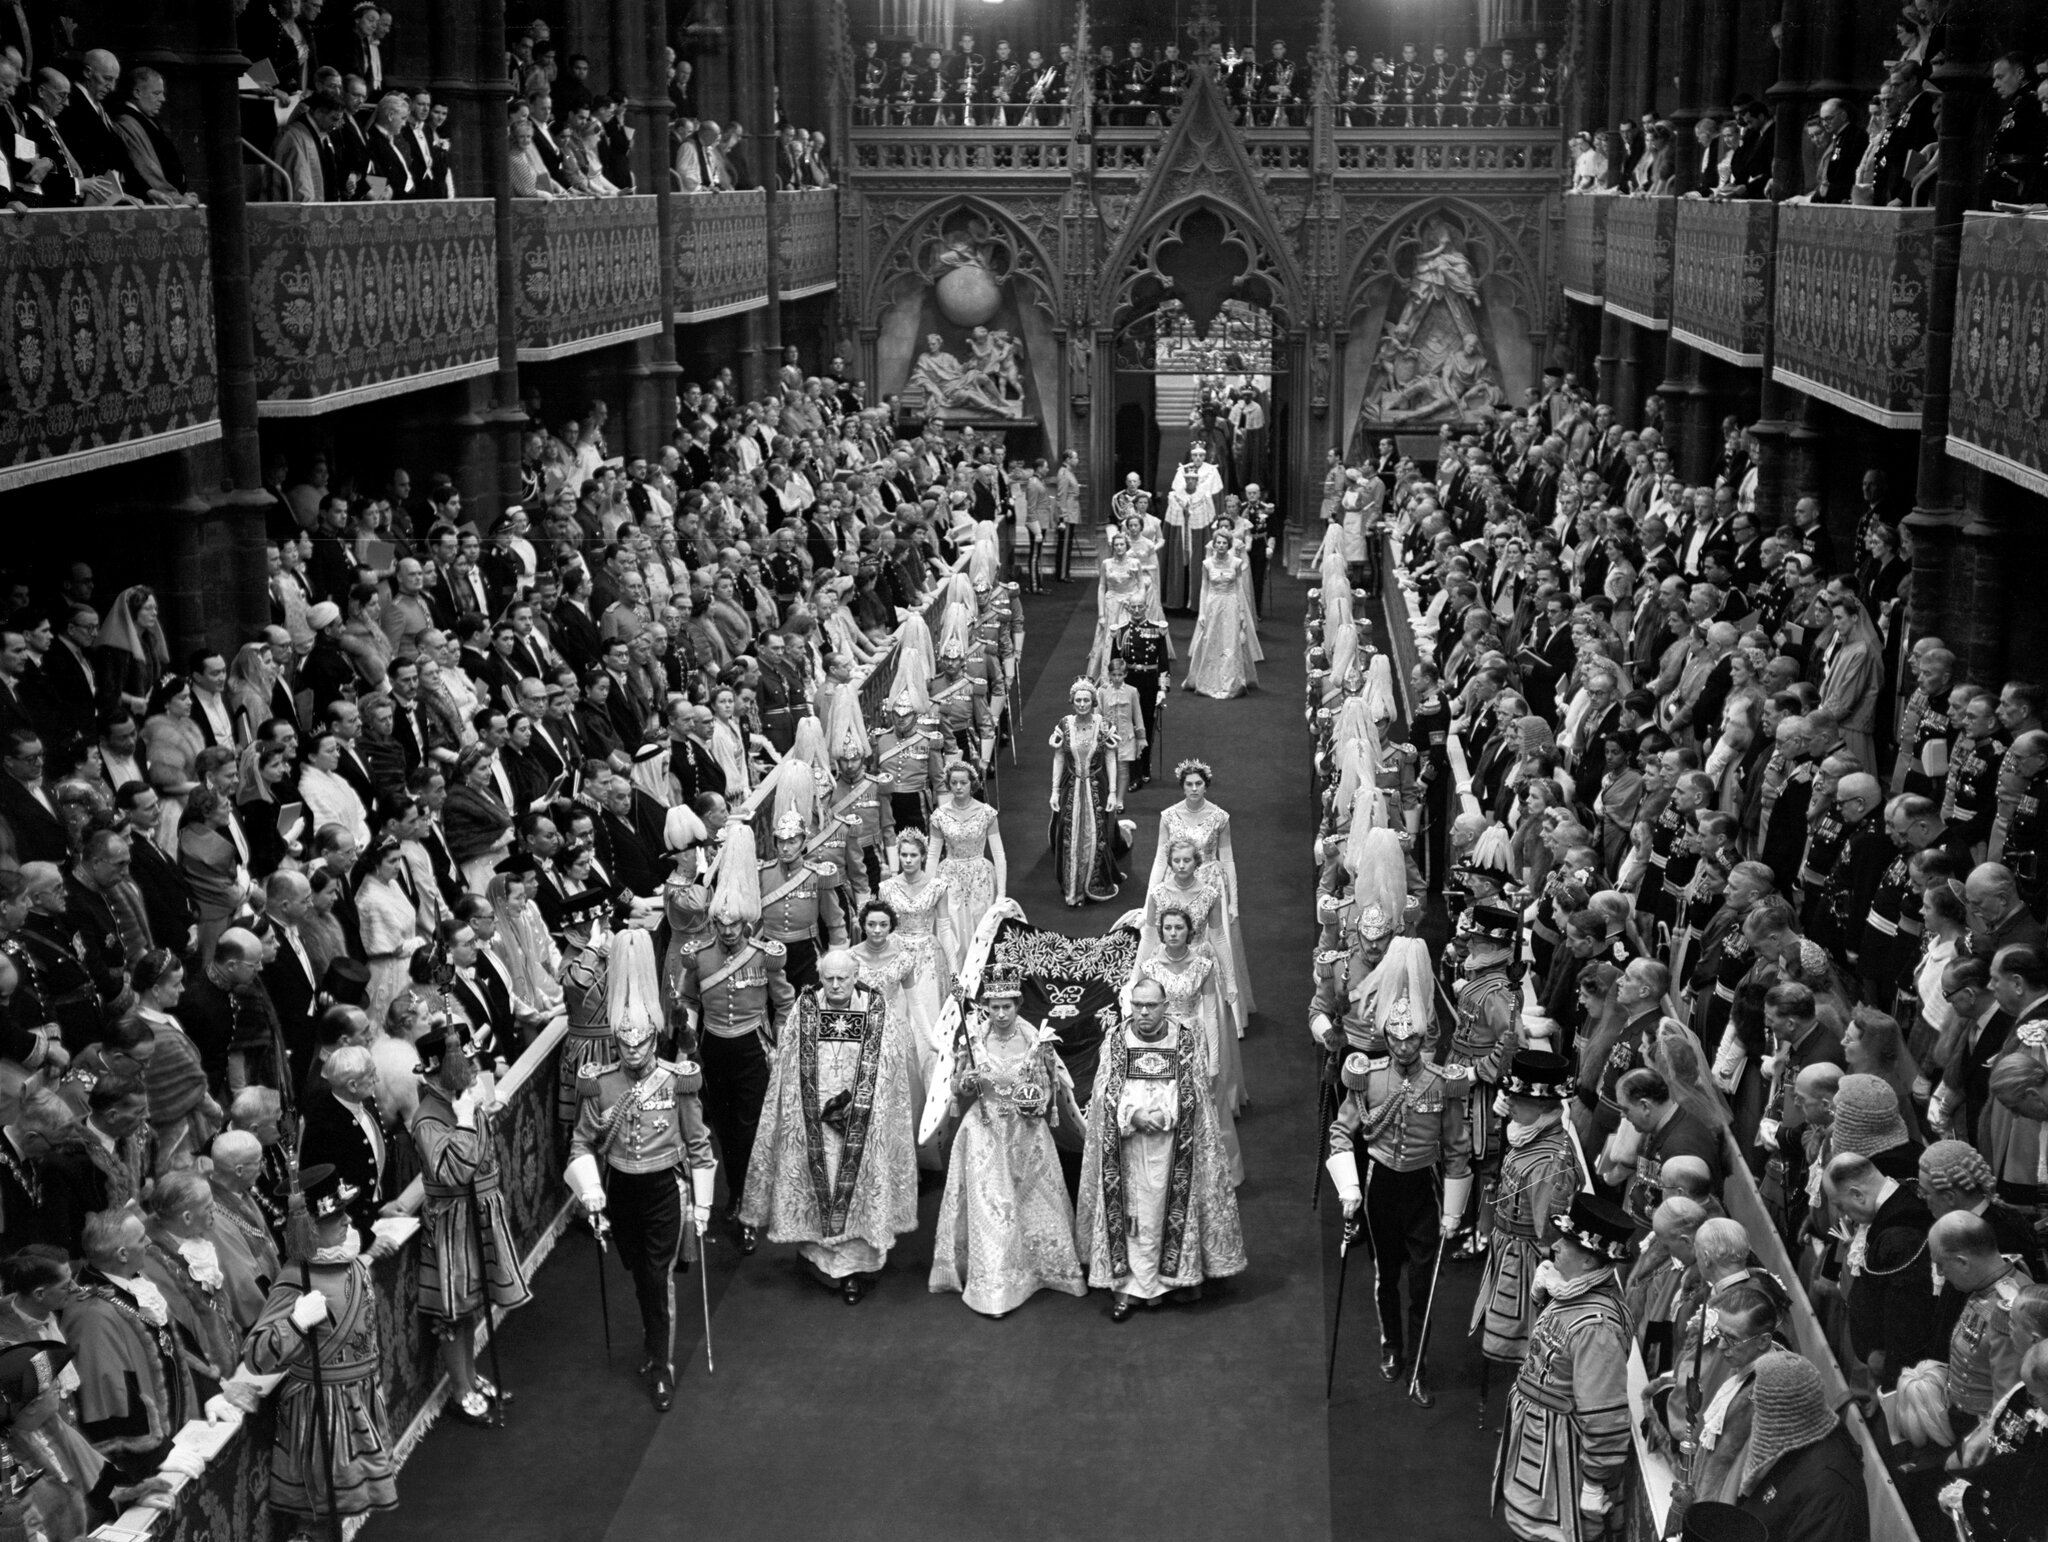 Queen Elizabeth Ii The Longest Serving British Monarch Dies At 96 Libre Times 0290